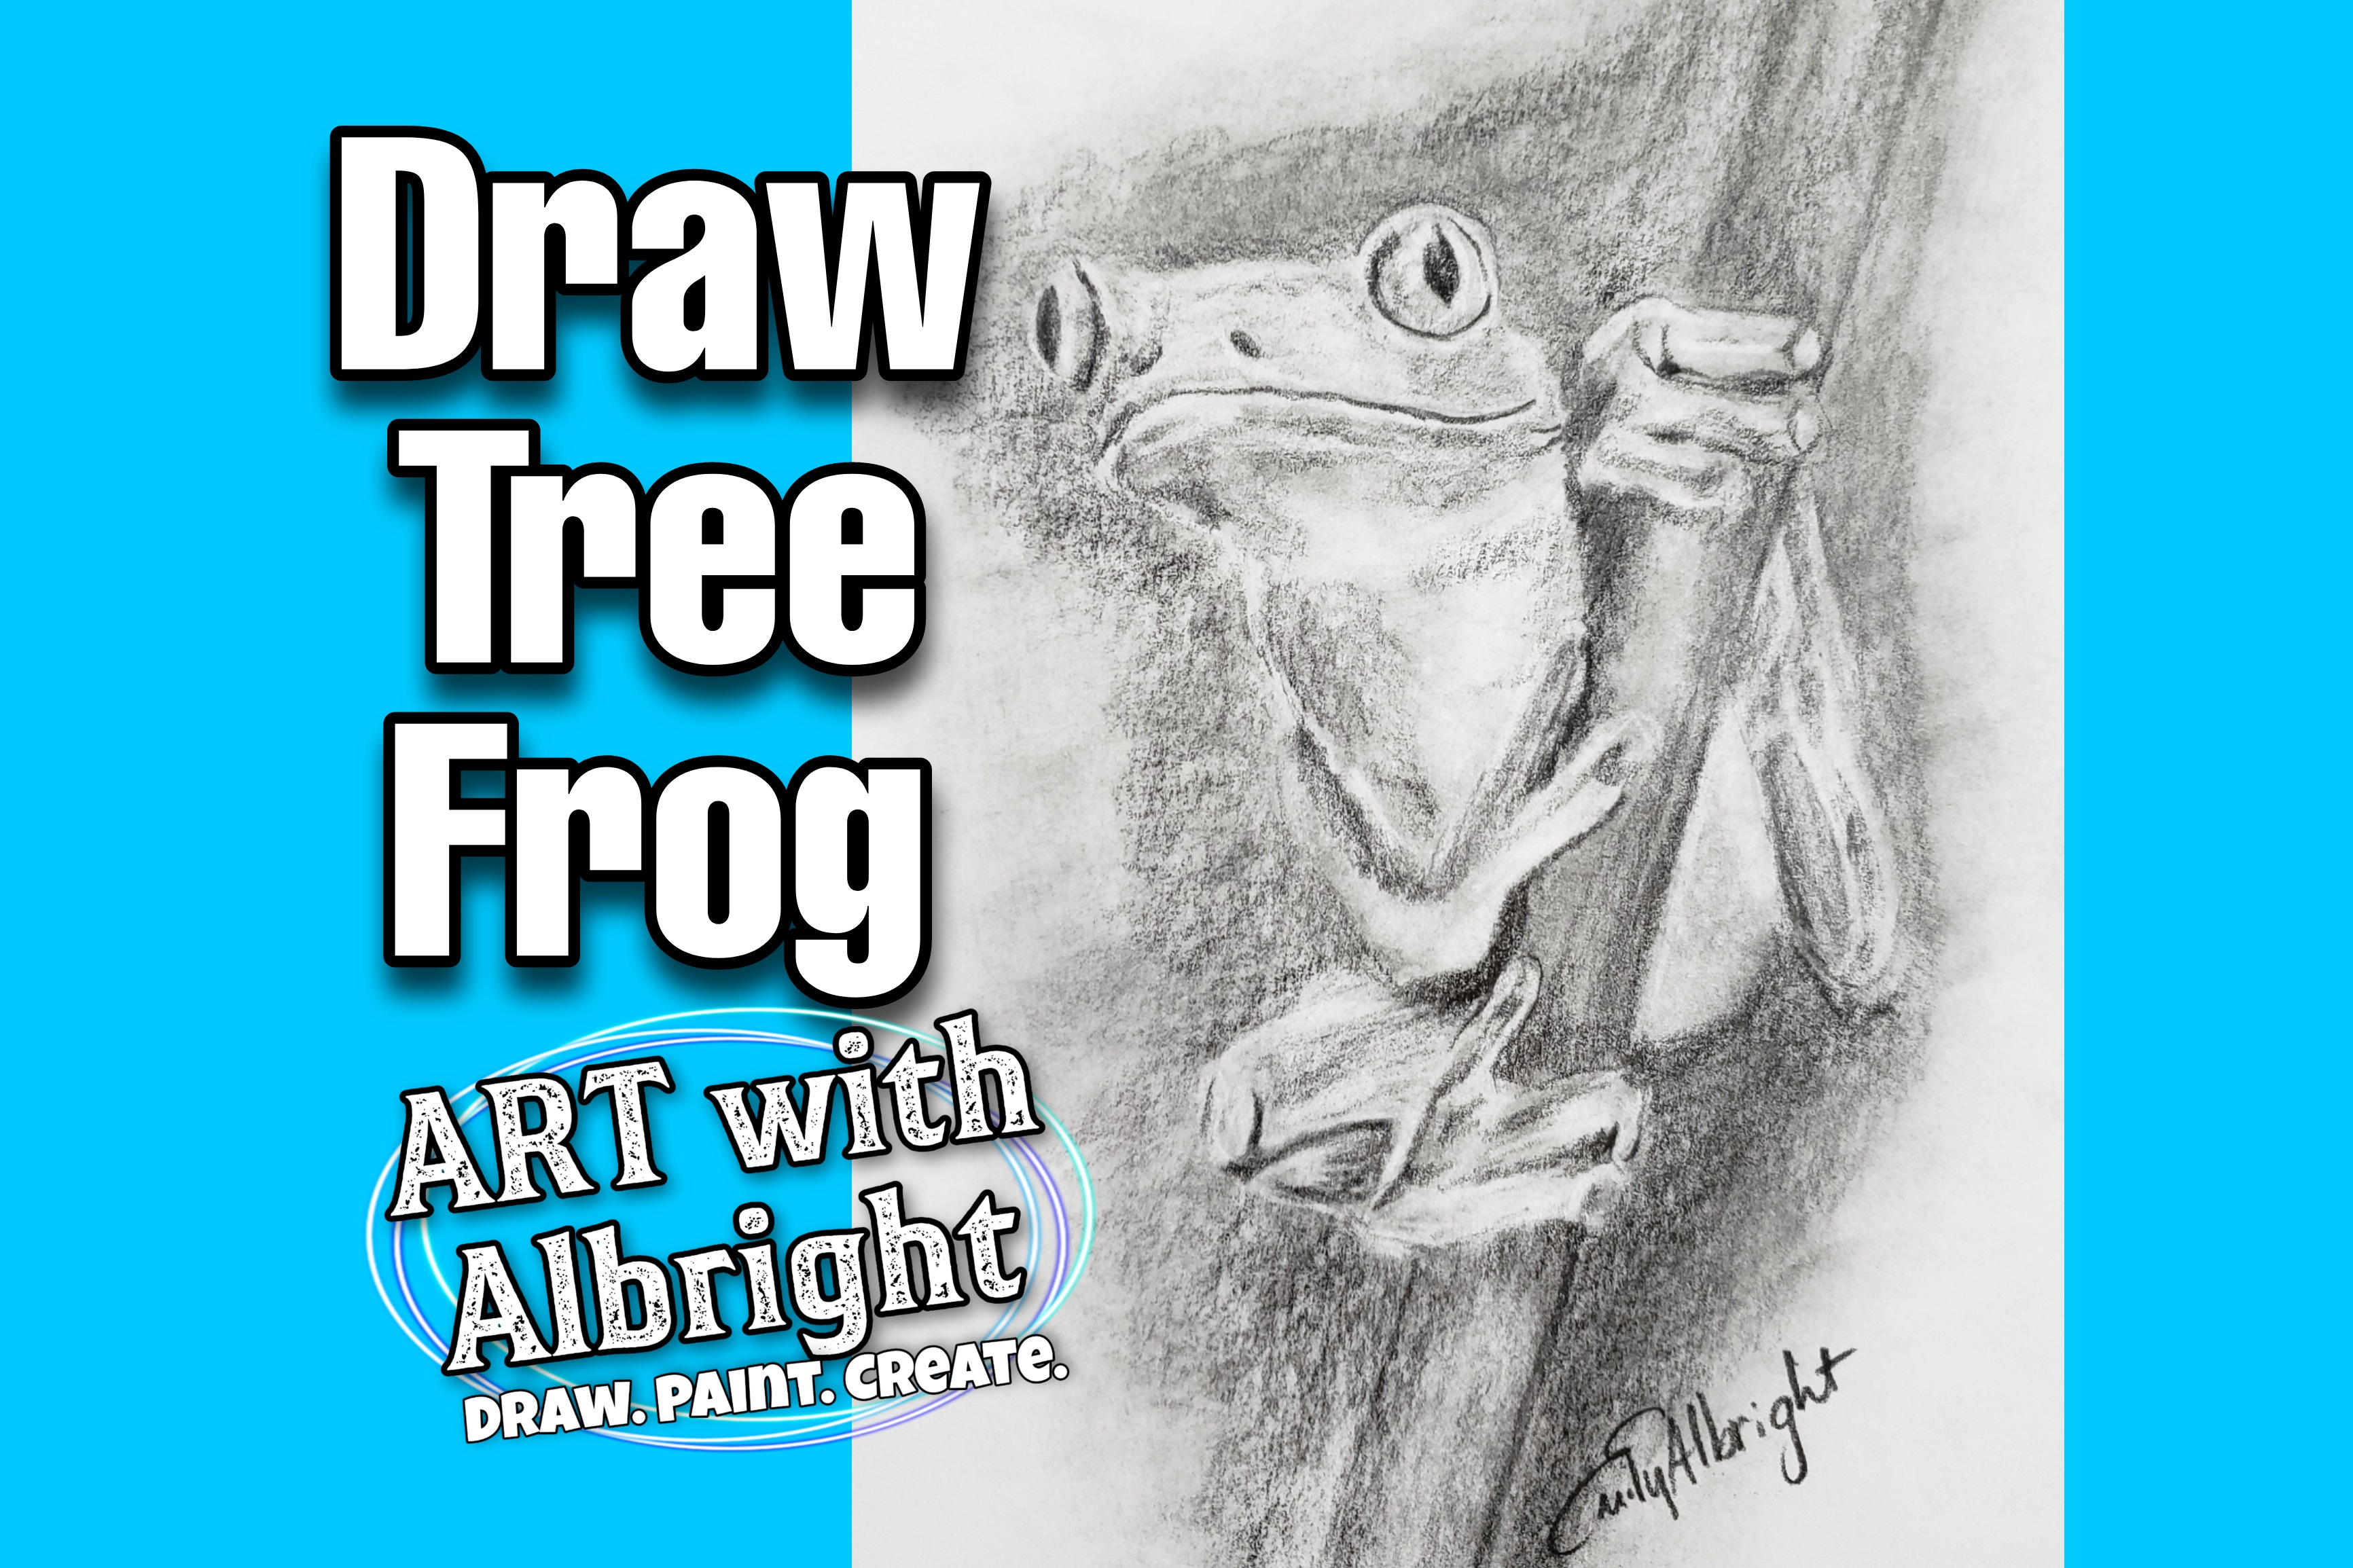 How To Draw Tree Frog | YouTube Studio Sketch Tutorial - YouTube